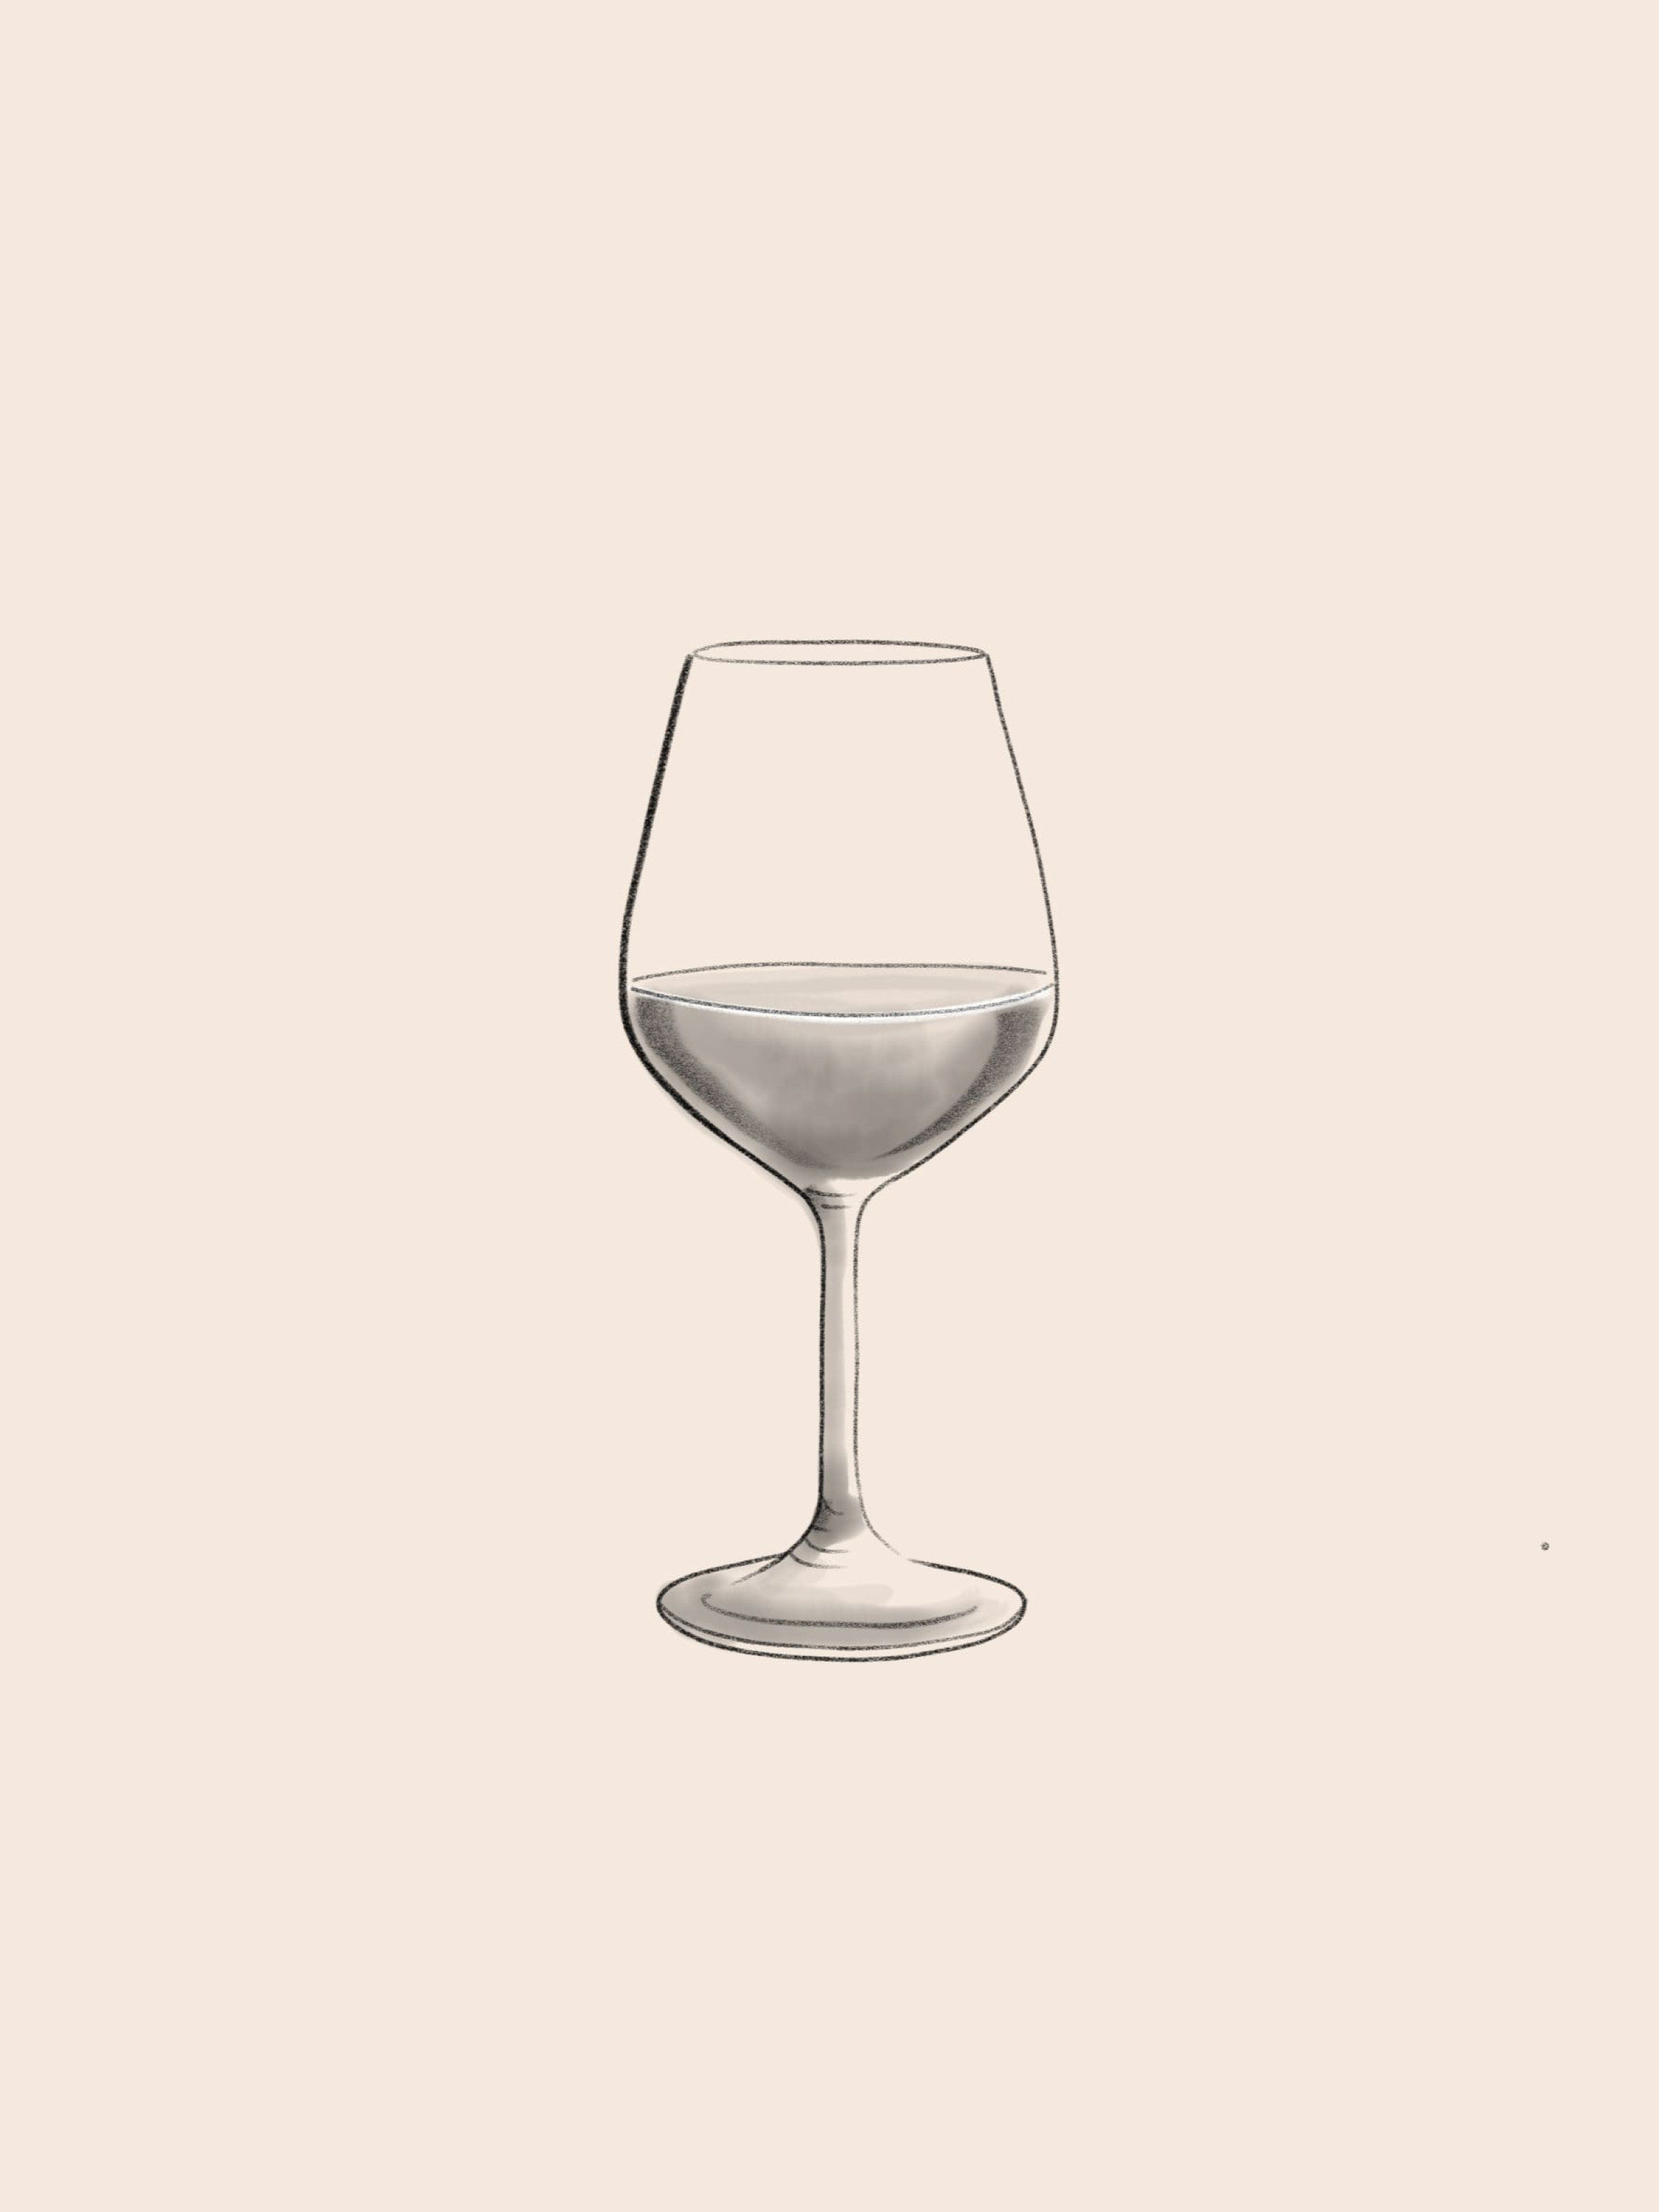 Illustration of a wine glass